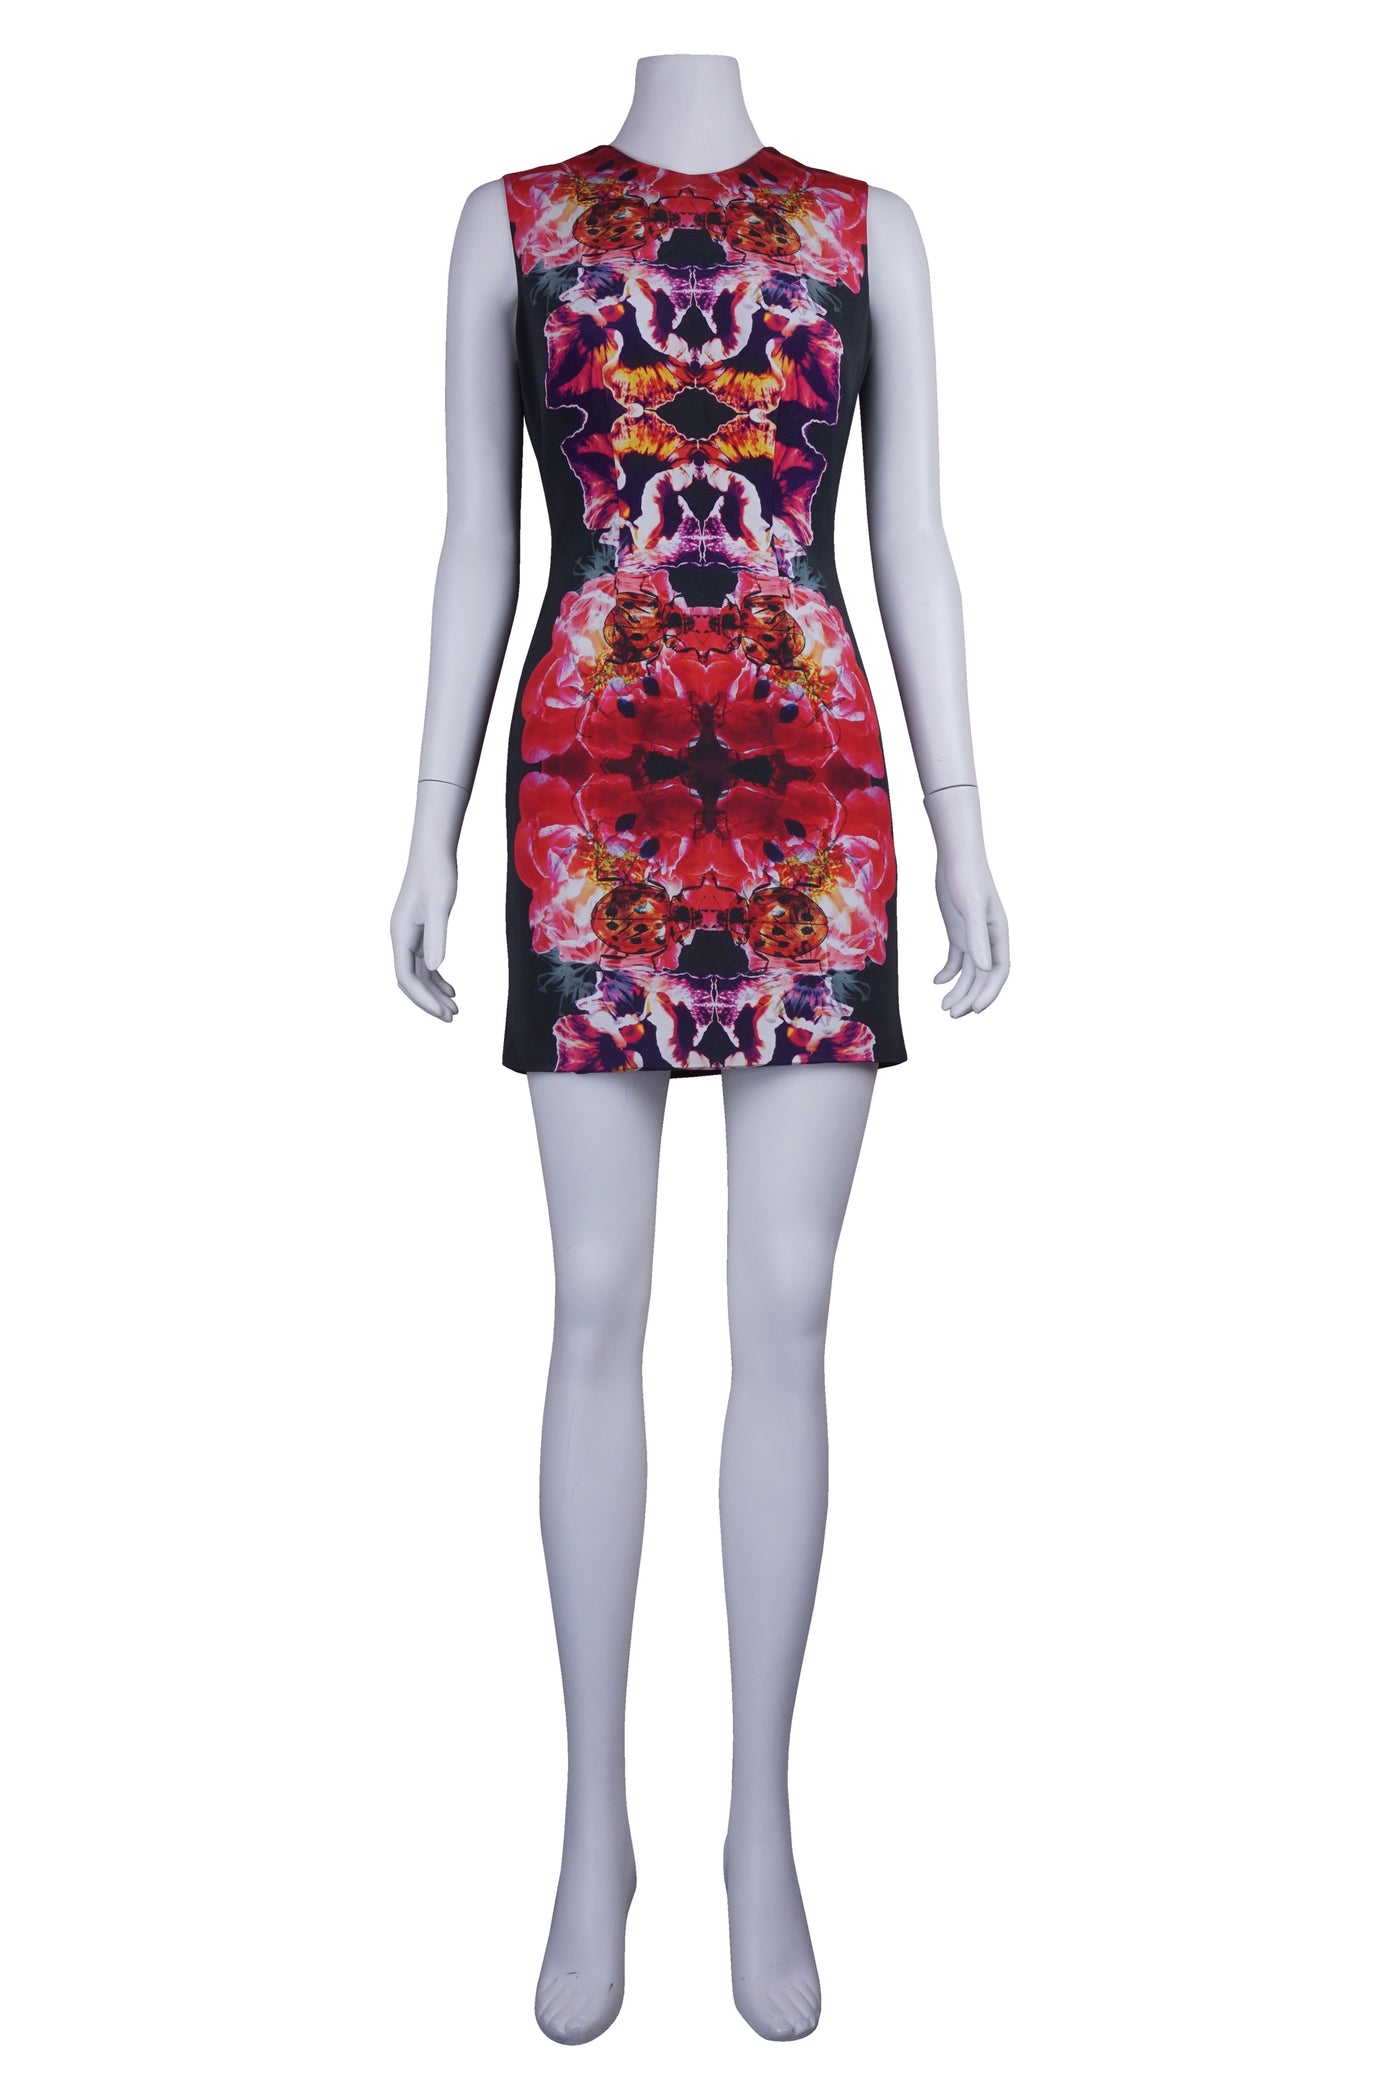 Ladybird panel print dress